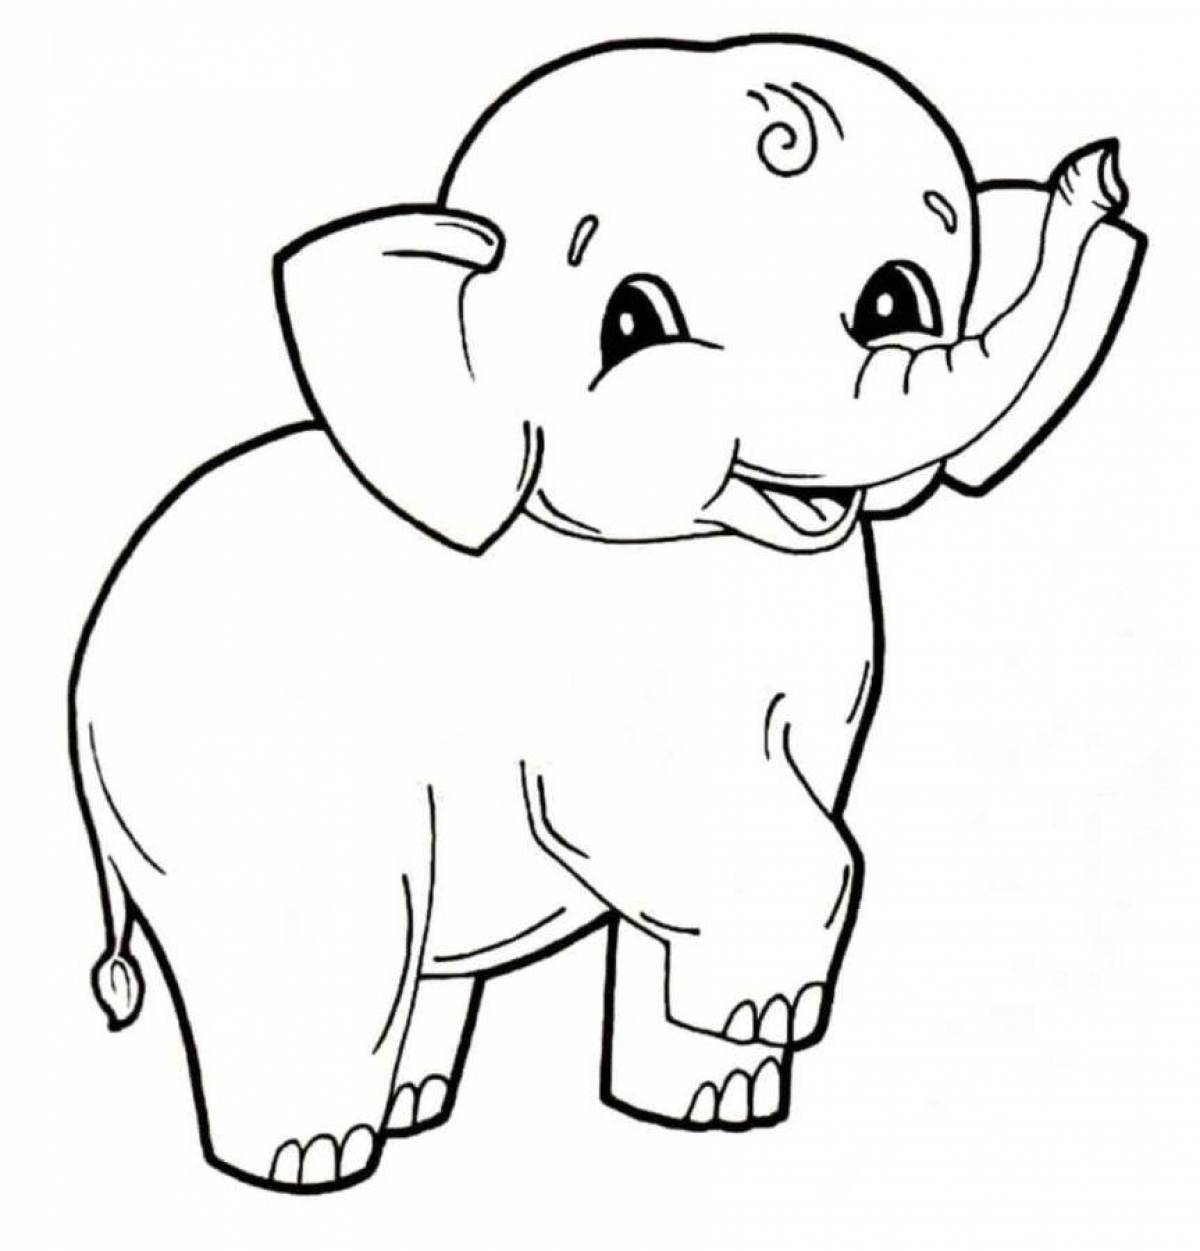 Изысканная раскраска слонёнок